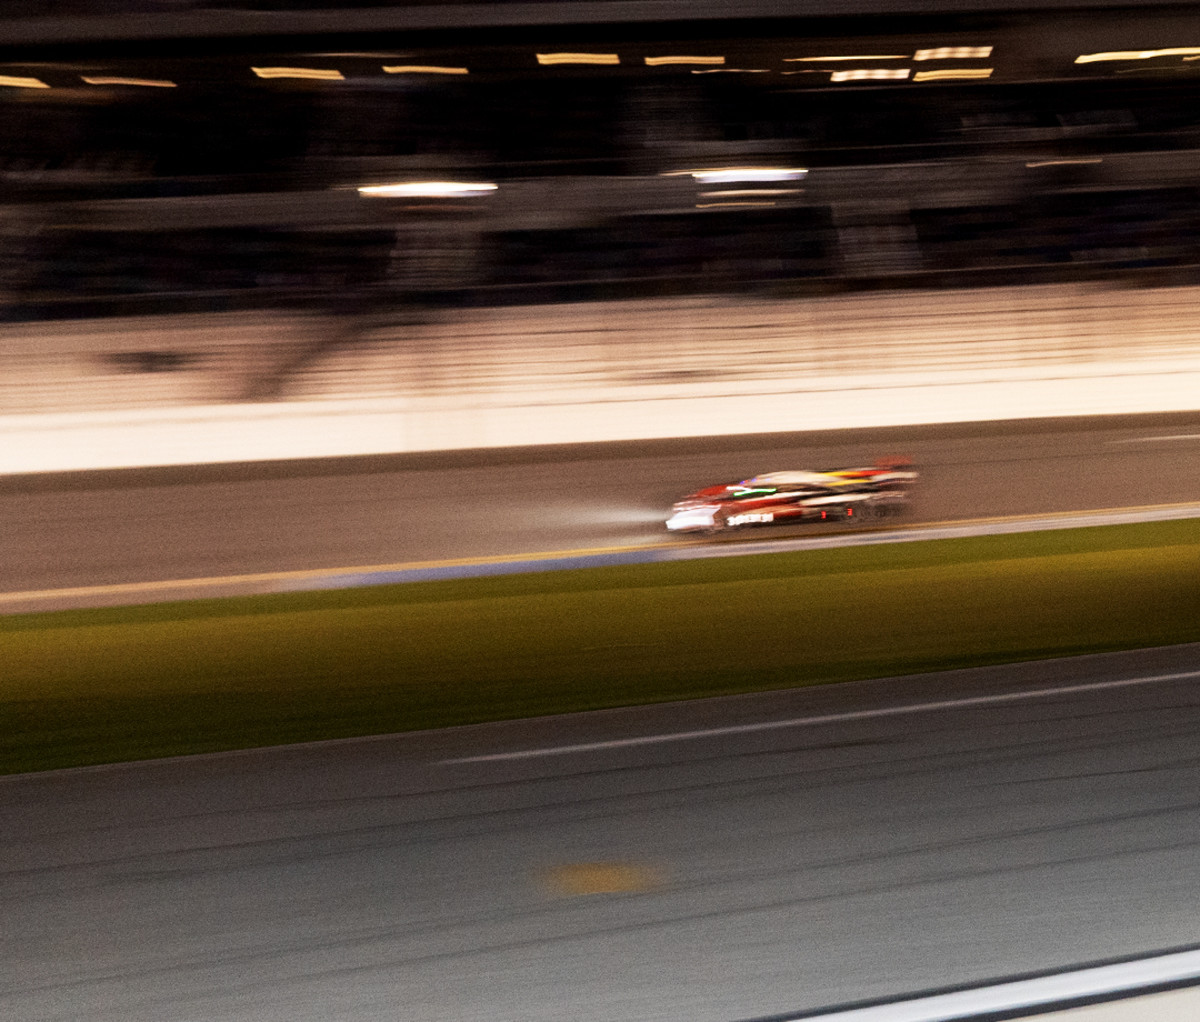 Blurry shot of a racecar driving at night at Daytona Speedway.